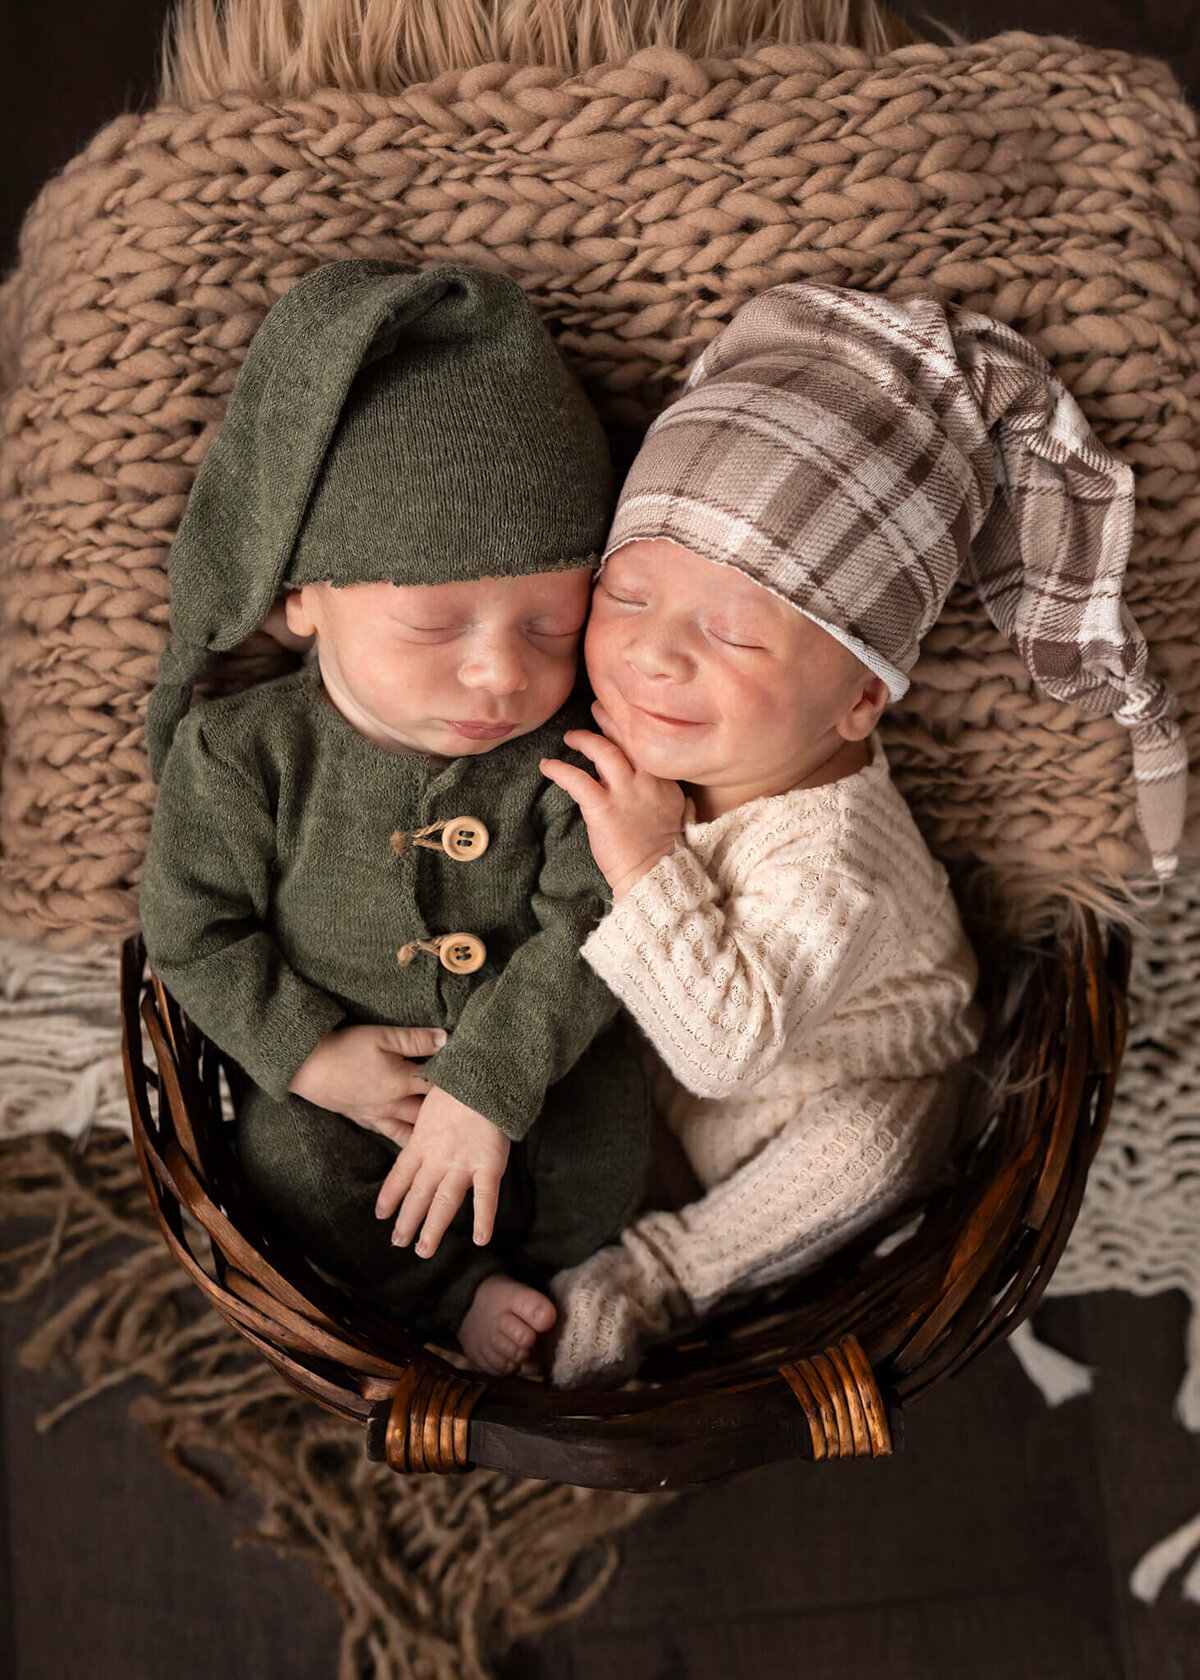 NJ baby photographer poses newborn twin babies